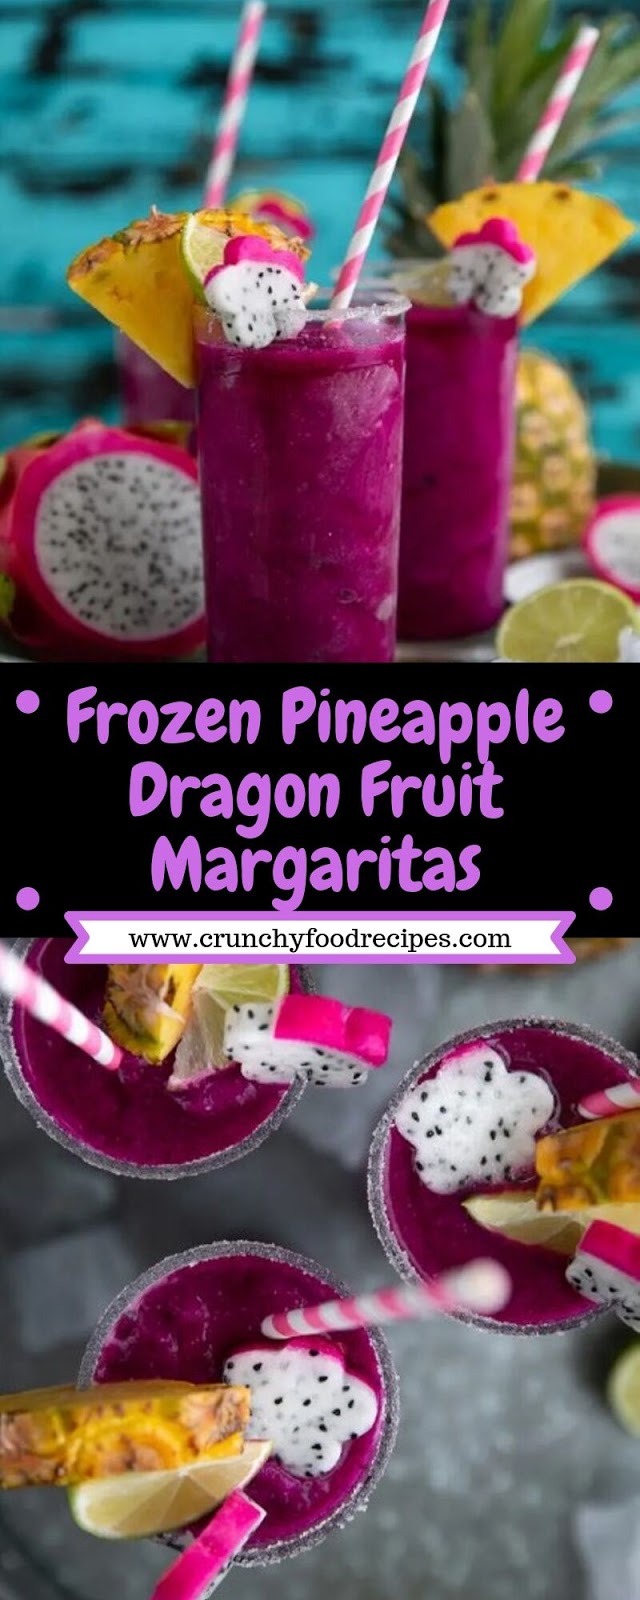 Frozen Pineapple Dragon Fruit Margaritas